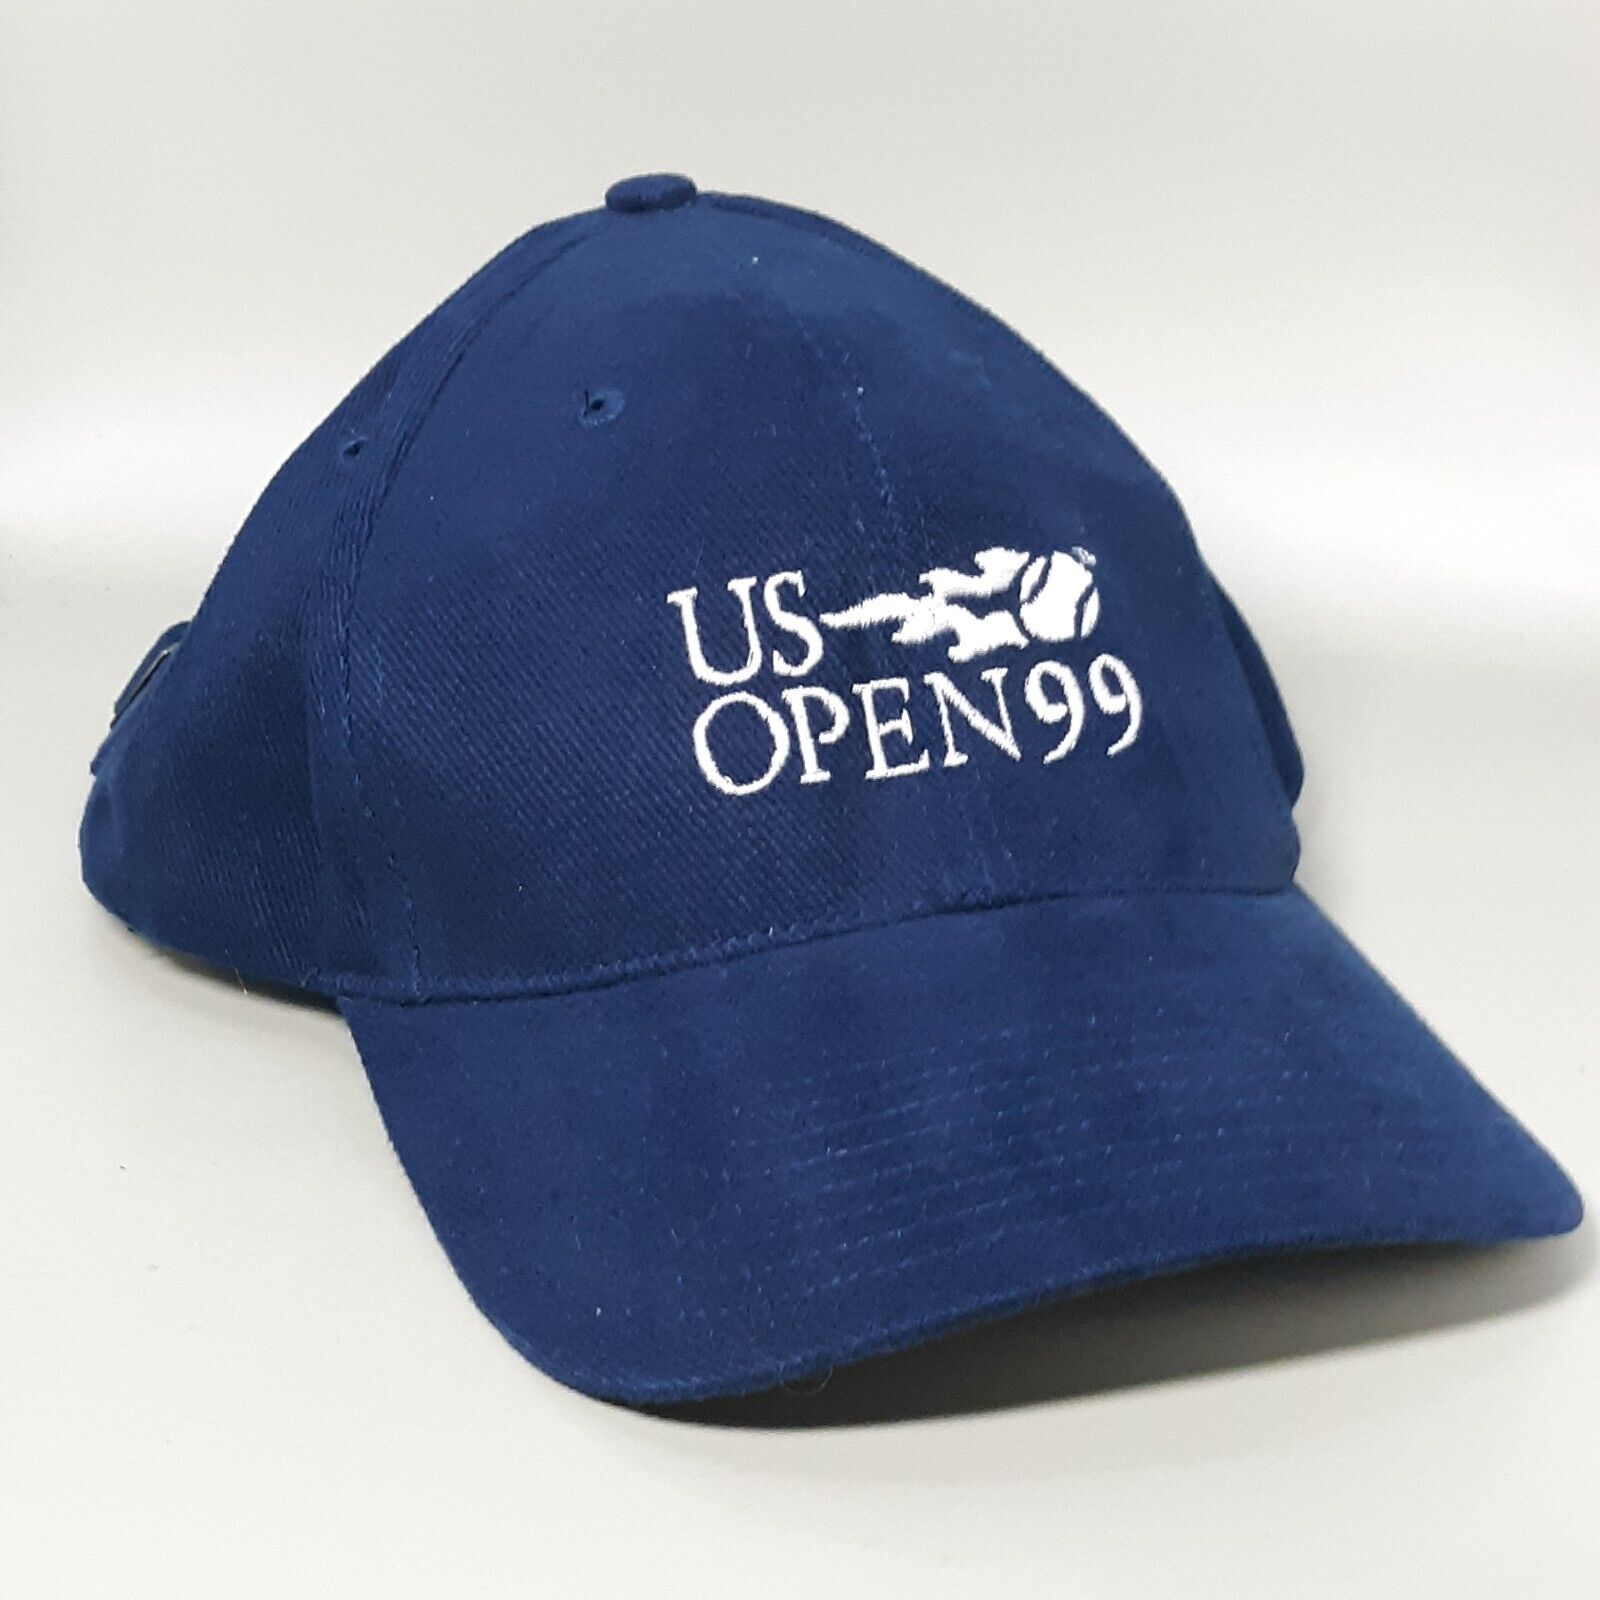 Vintage U.S. OPEN Tennis 1999 Hat Infiniti Sponsor New Licensed product Blue